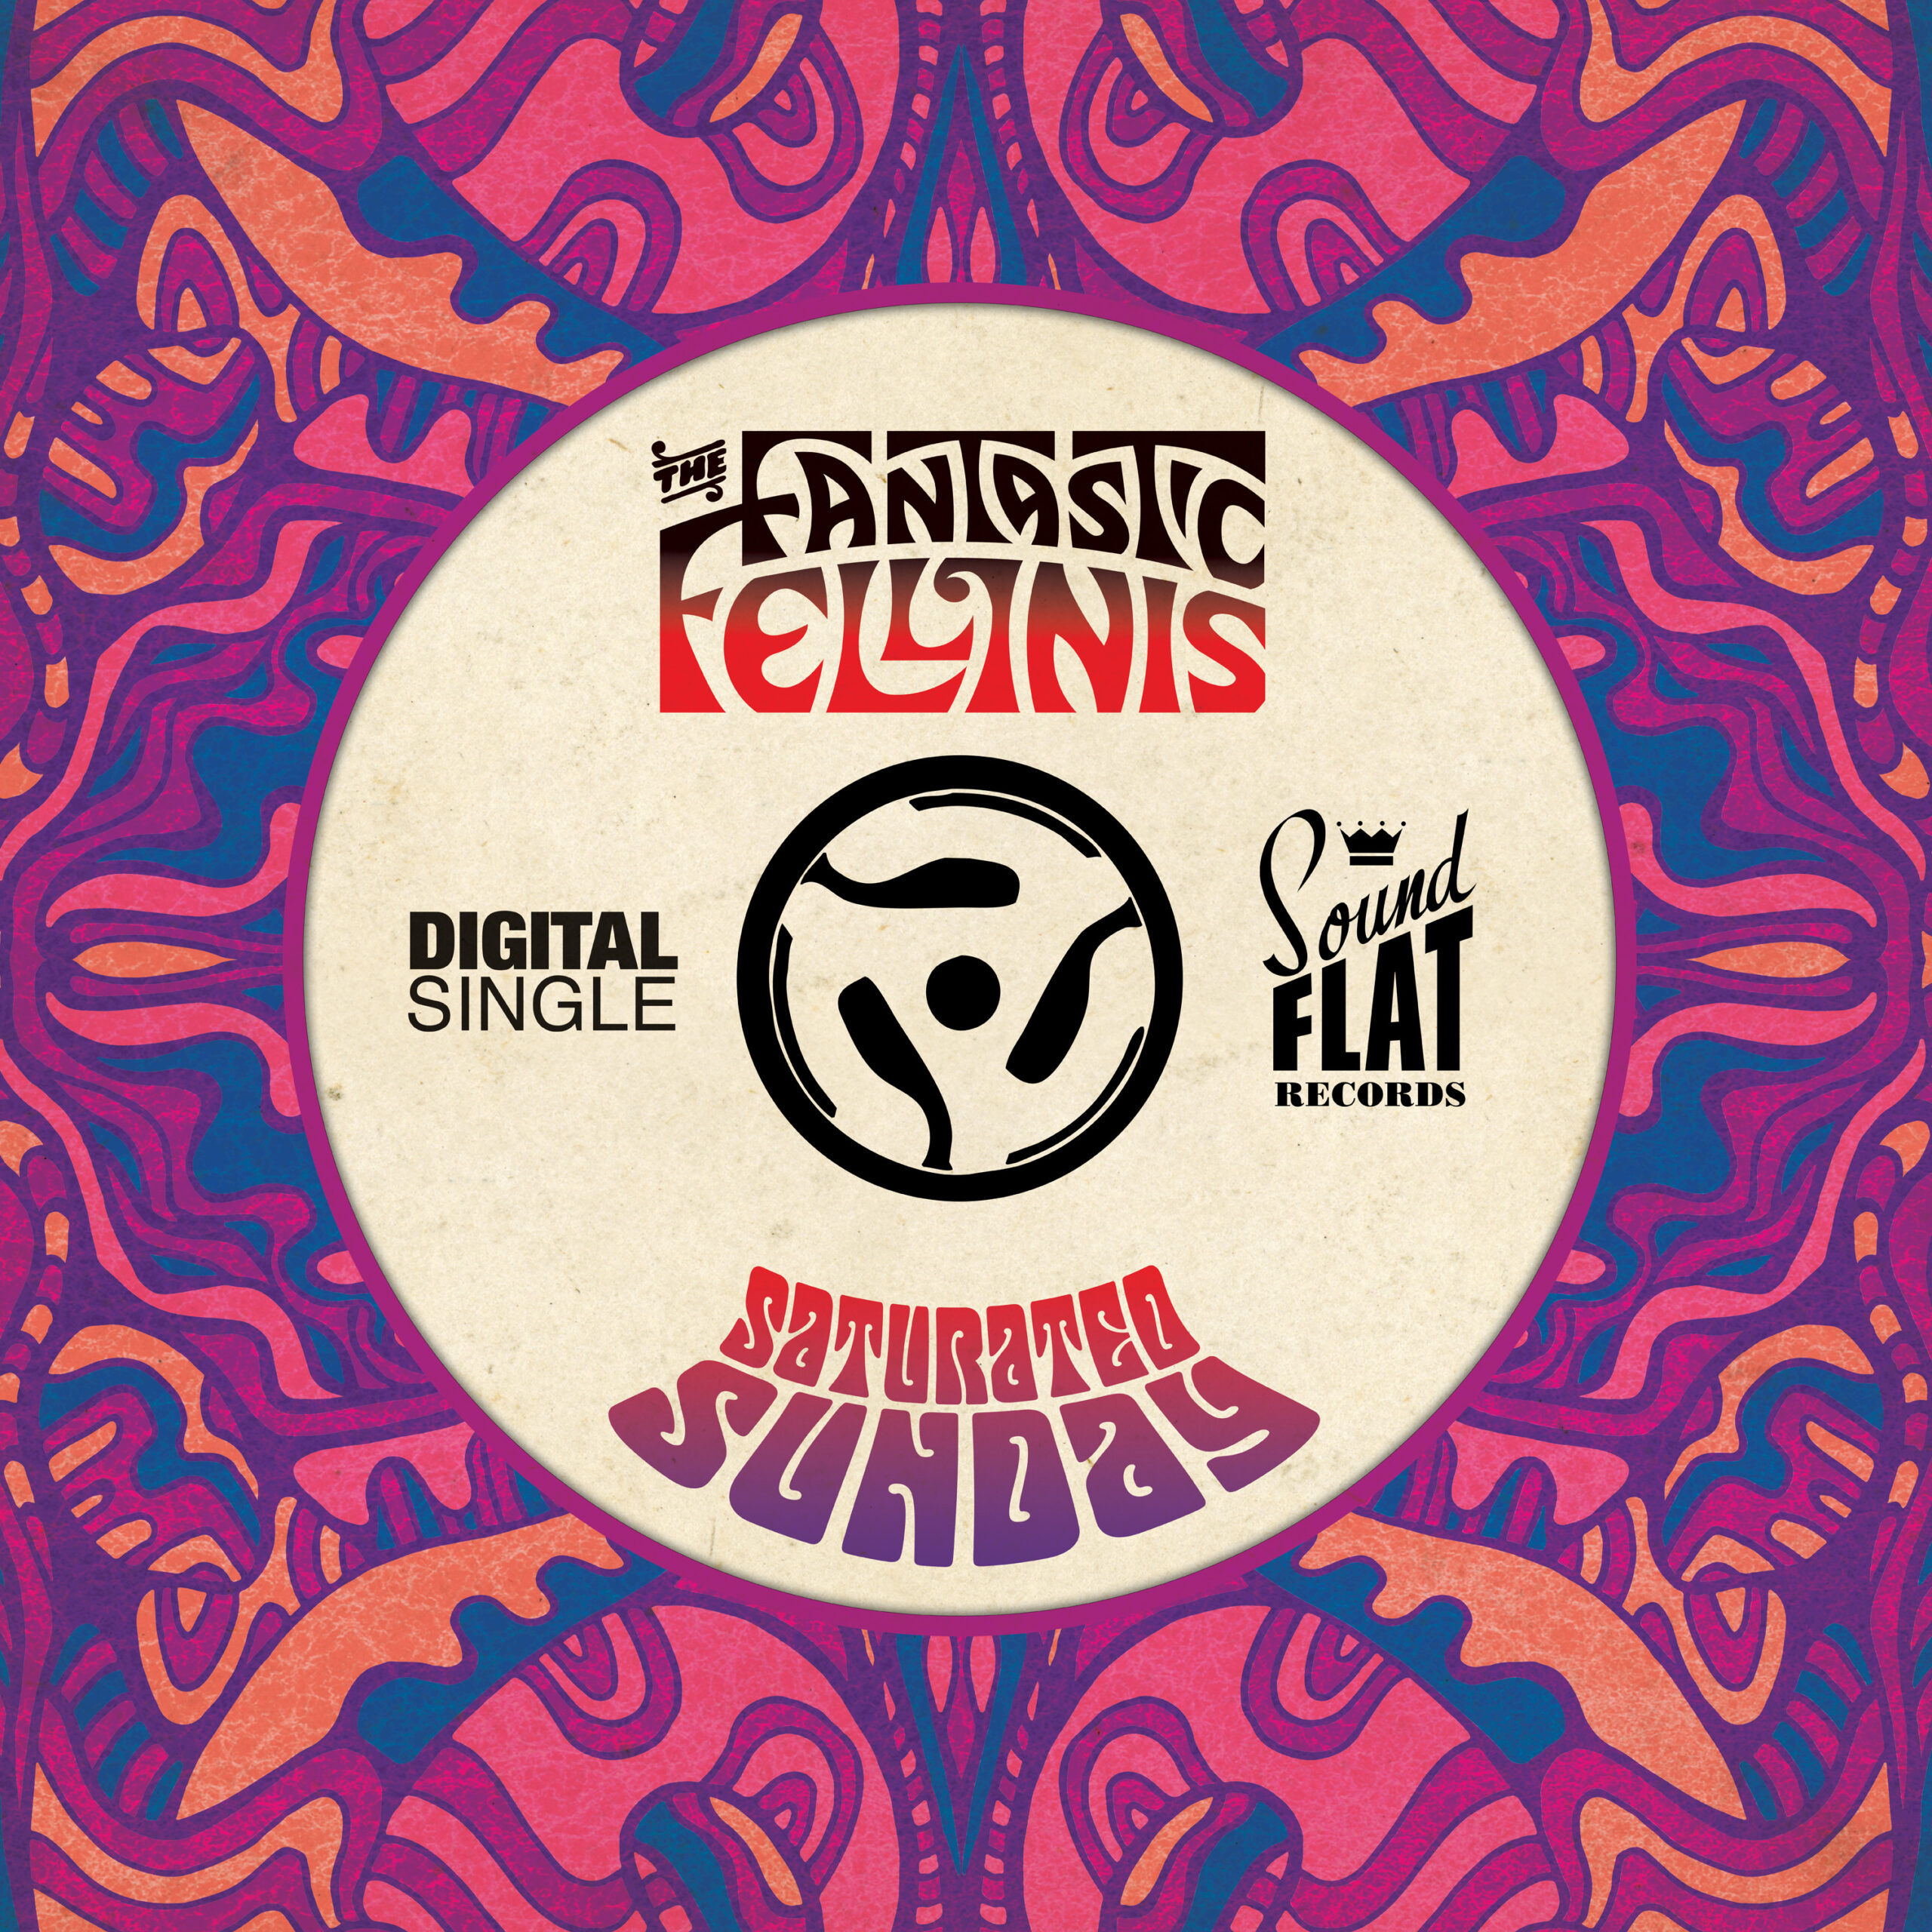 The Fantastic Fellinis – Saturated Sunday digital-single